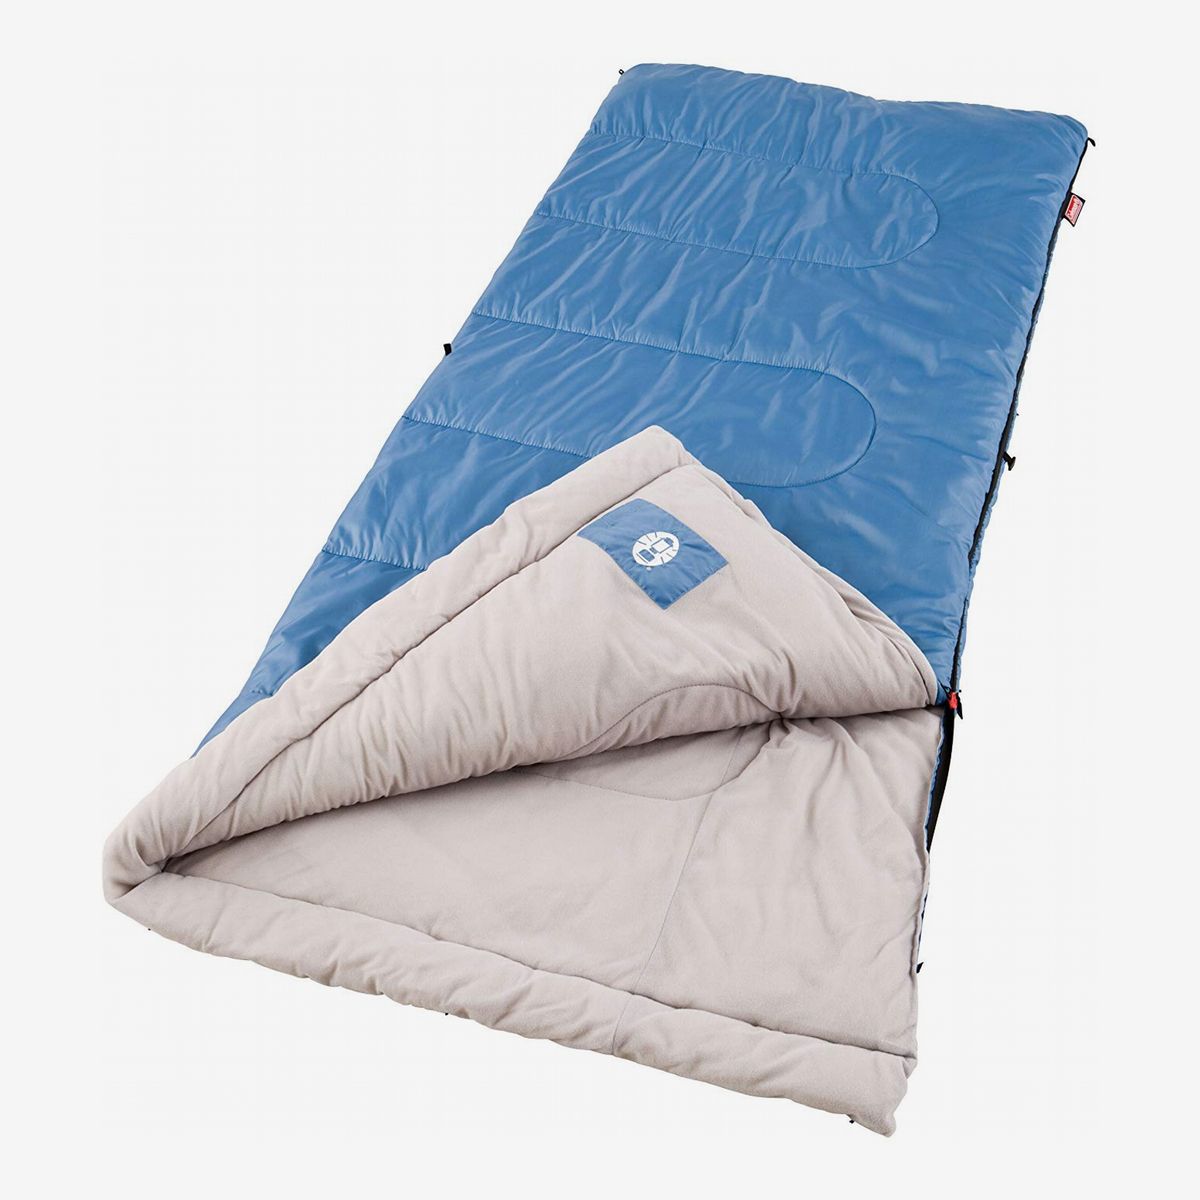 Large Single Sleeping Bag Thermal Outdoor Camping Hiking Sleep Sack Package K3T2 